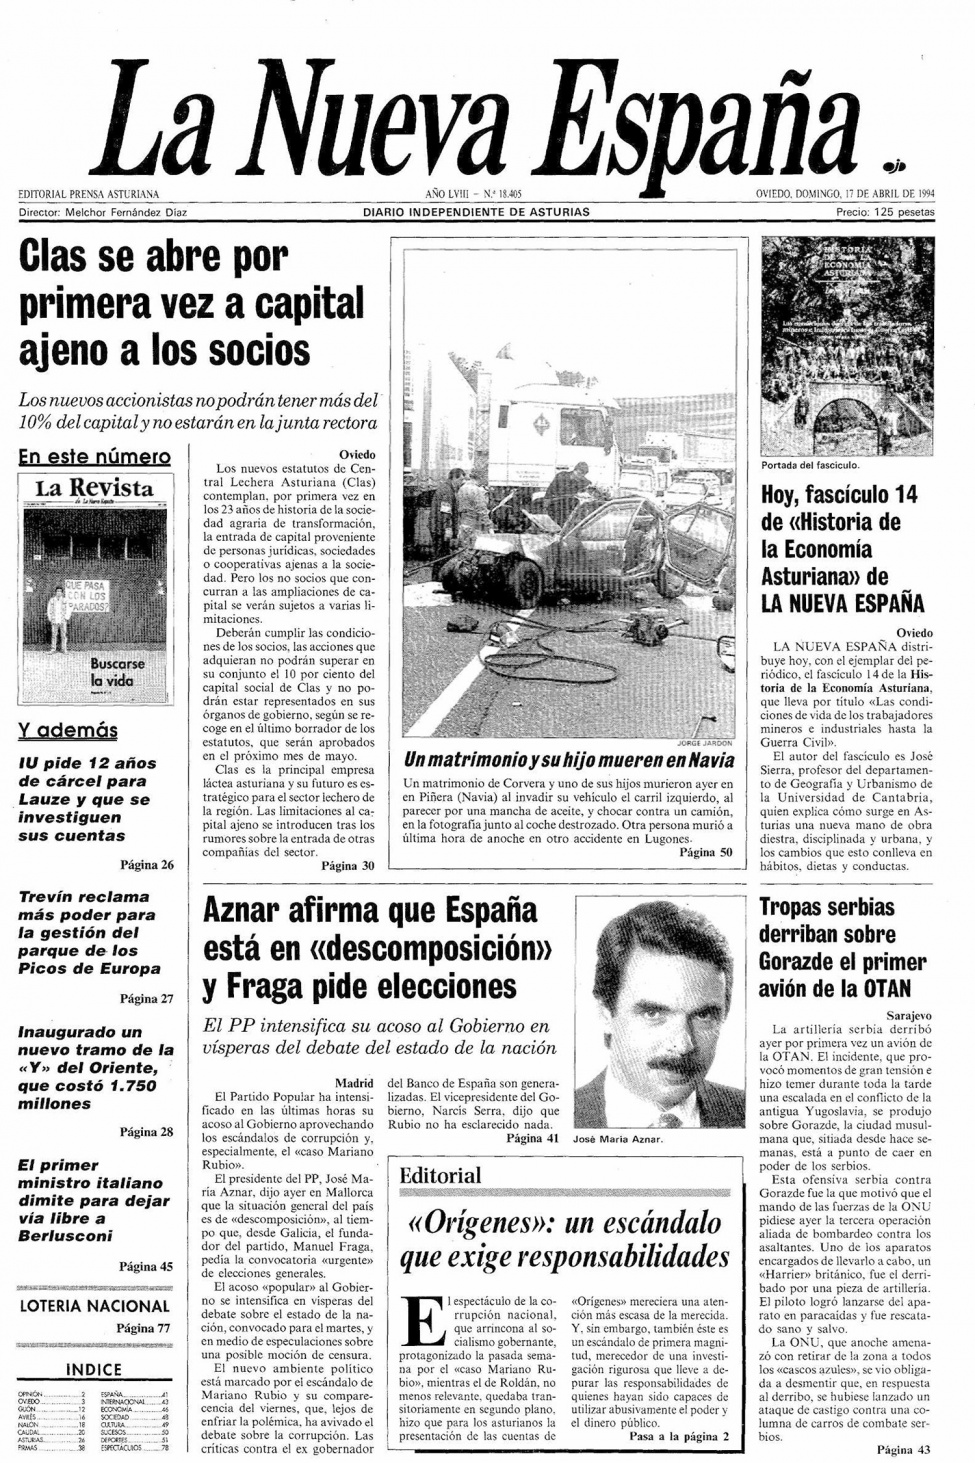 Portada del Domingo, 17 de Abril de 1994